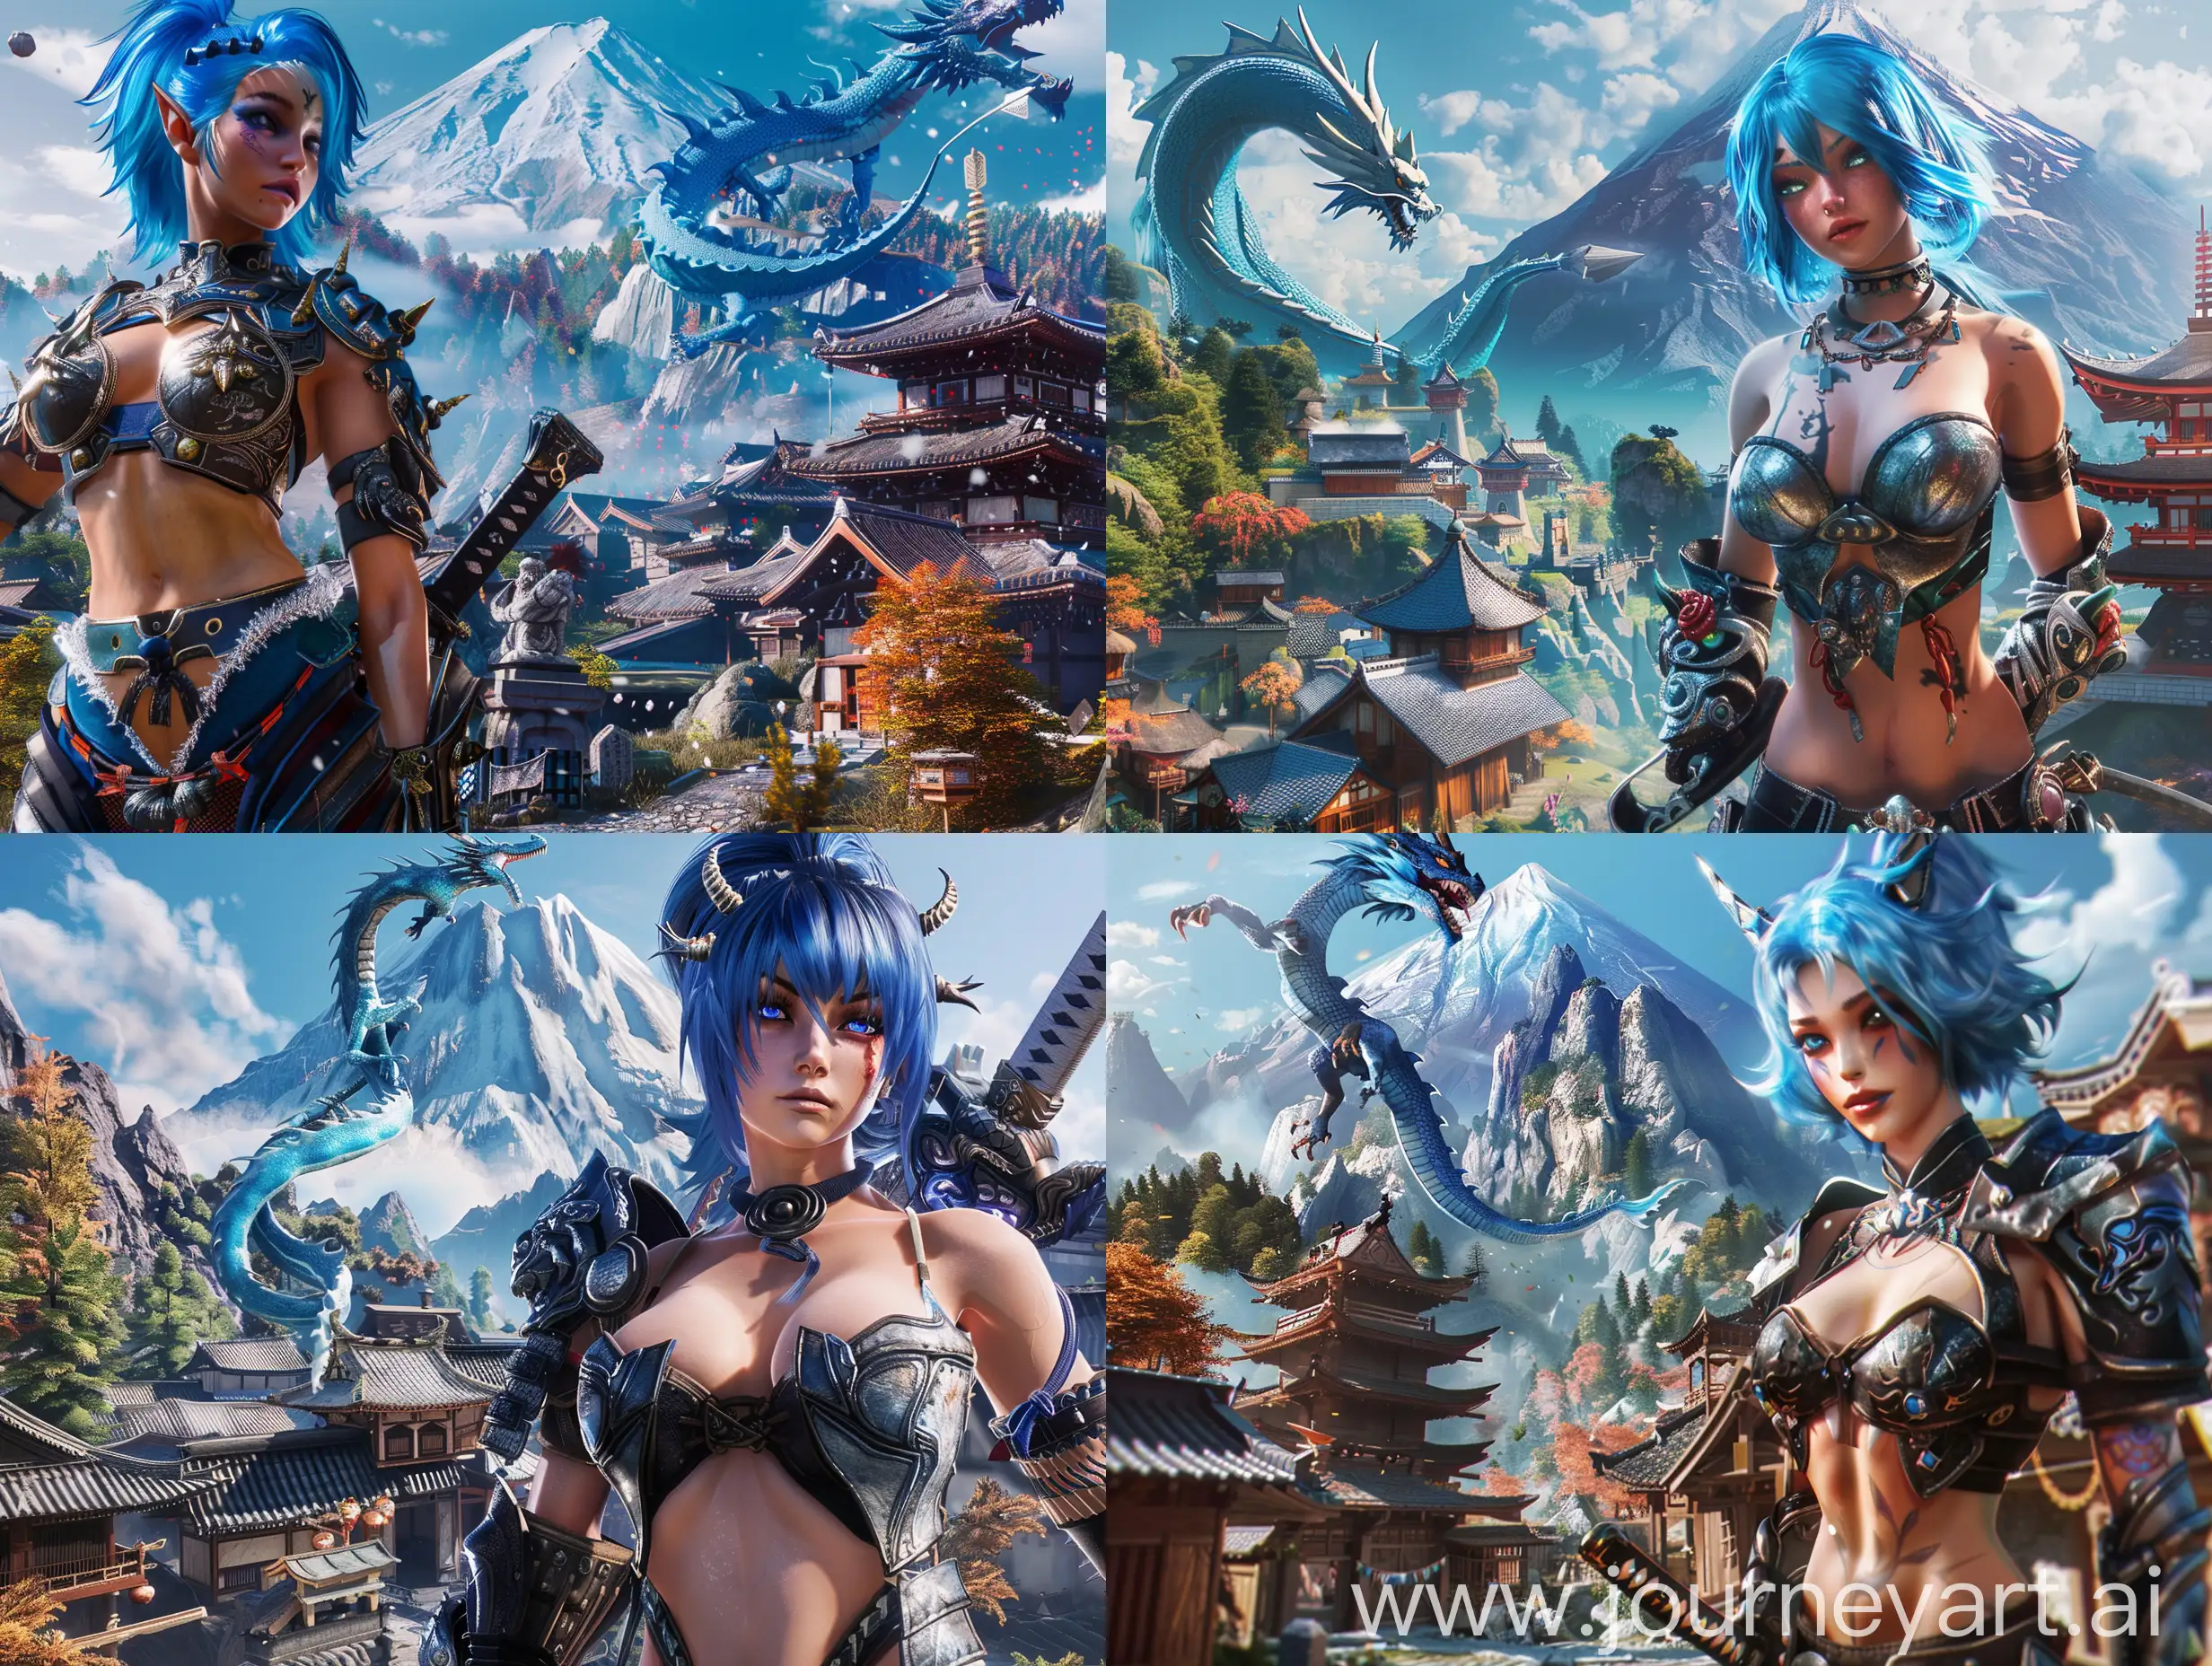 Japanese-Warrior-Woman-with-Blue-Dragon-in-Far-Eastern-Village